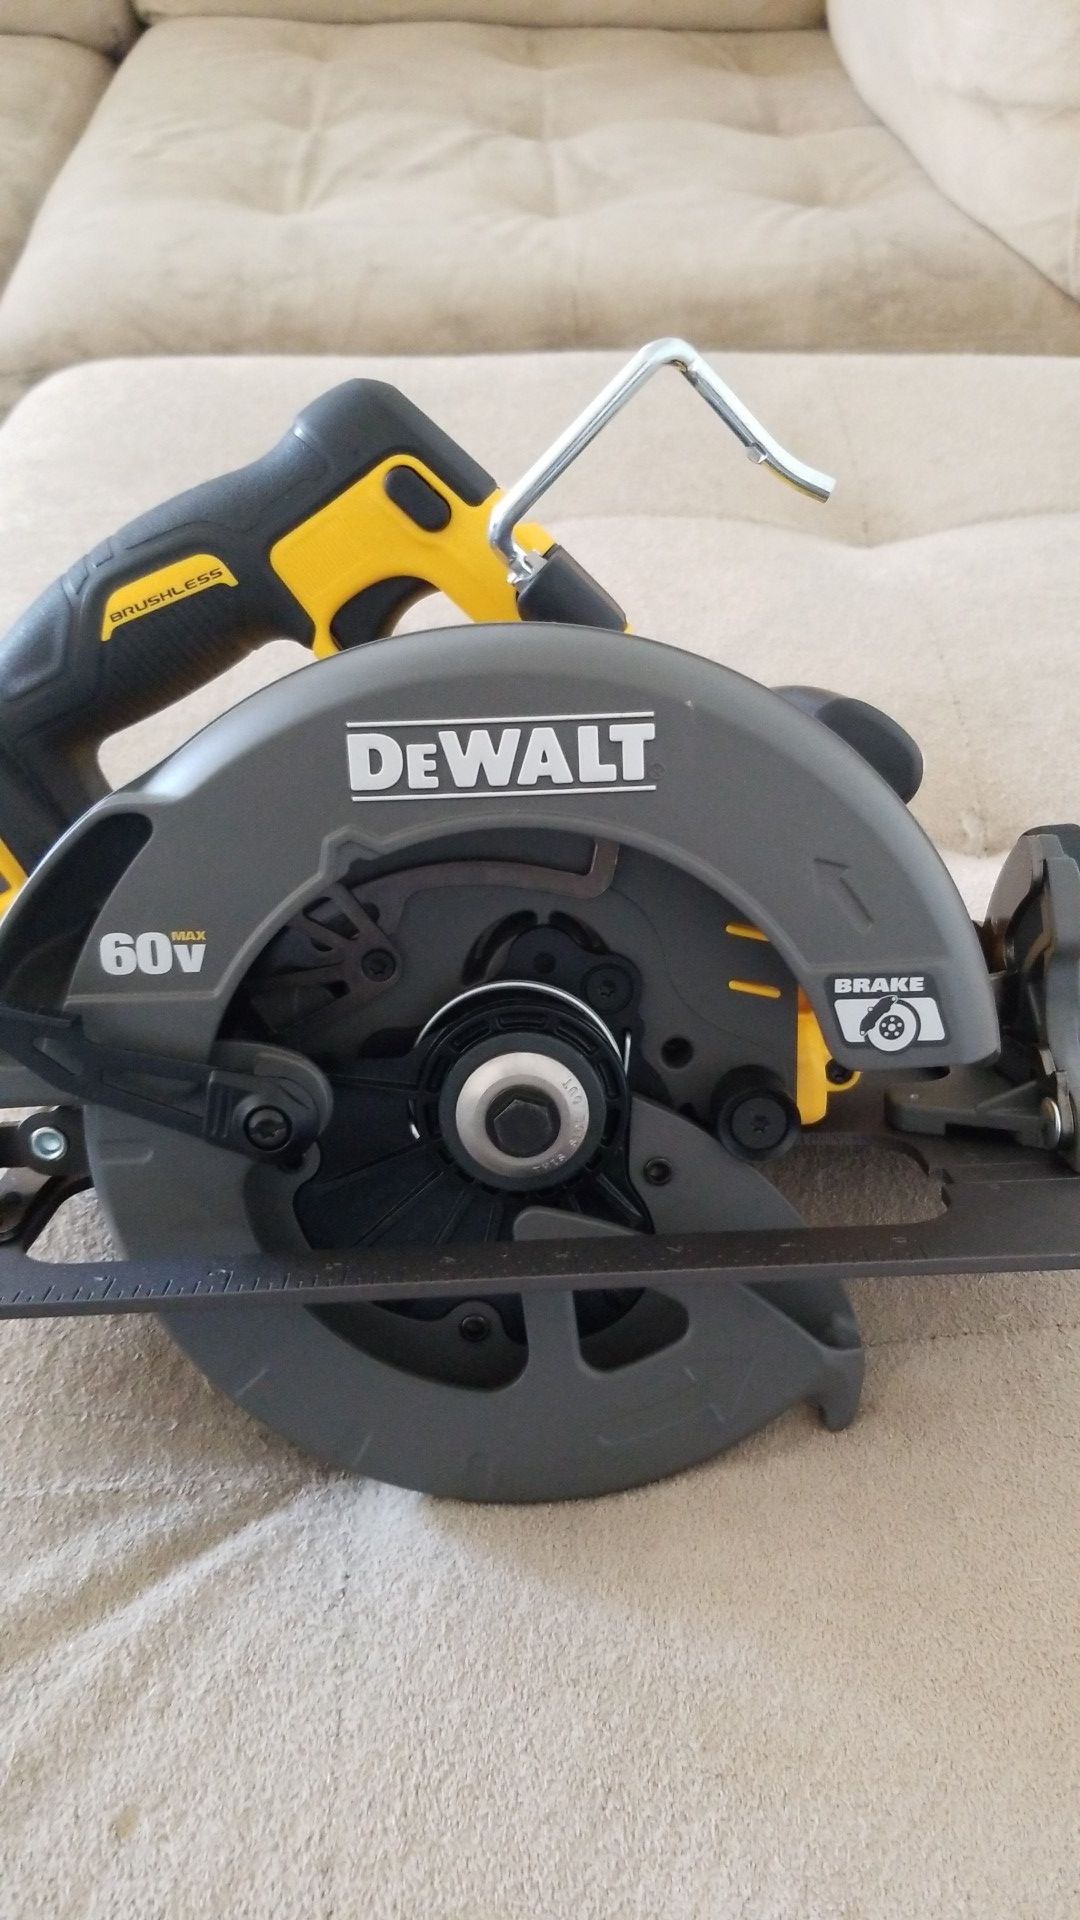 Brand new never used Dewalt Flexvolt Brushless 60v max circular saw.